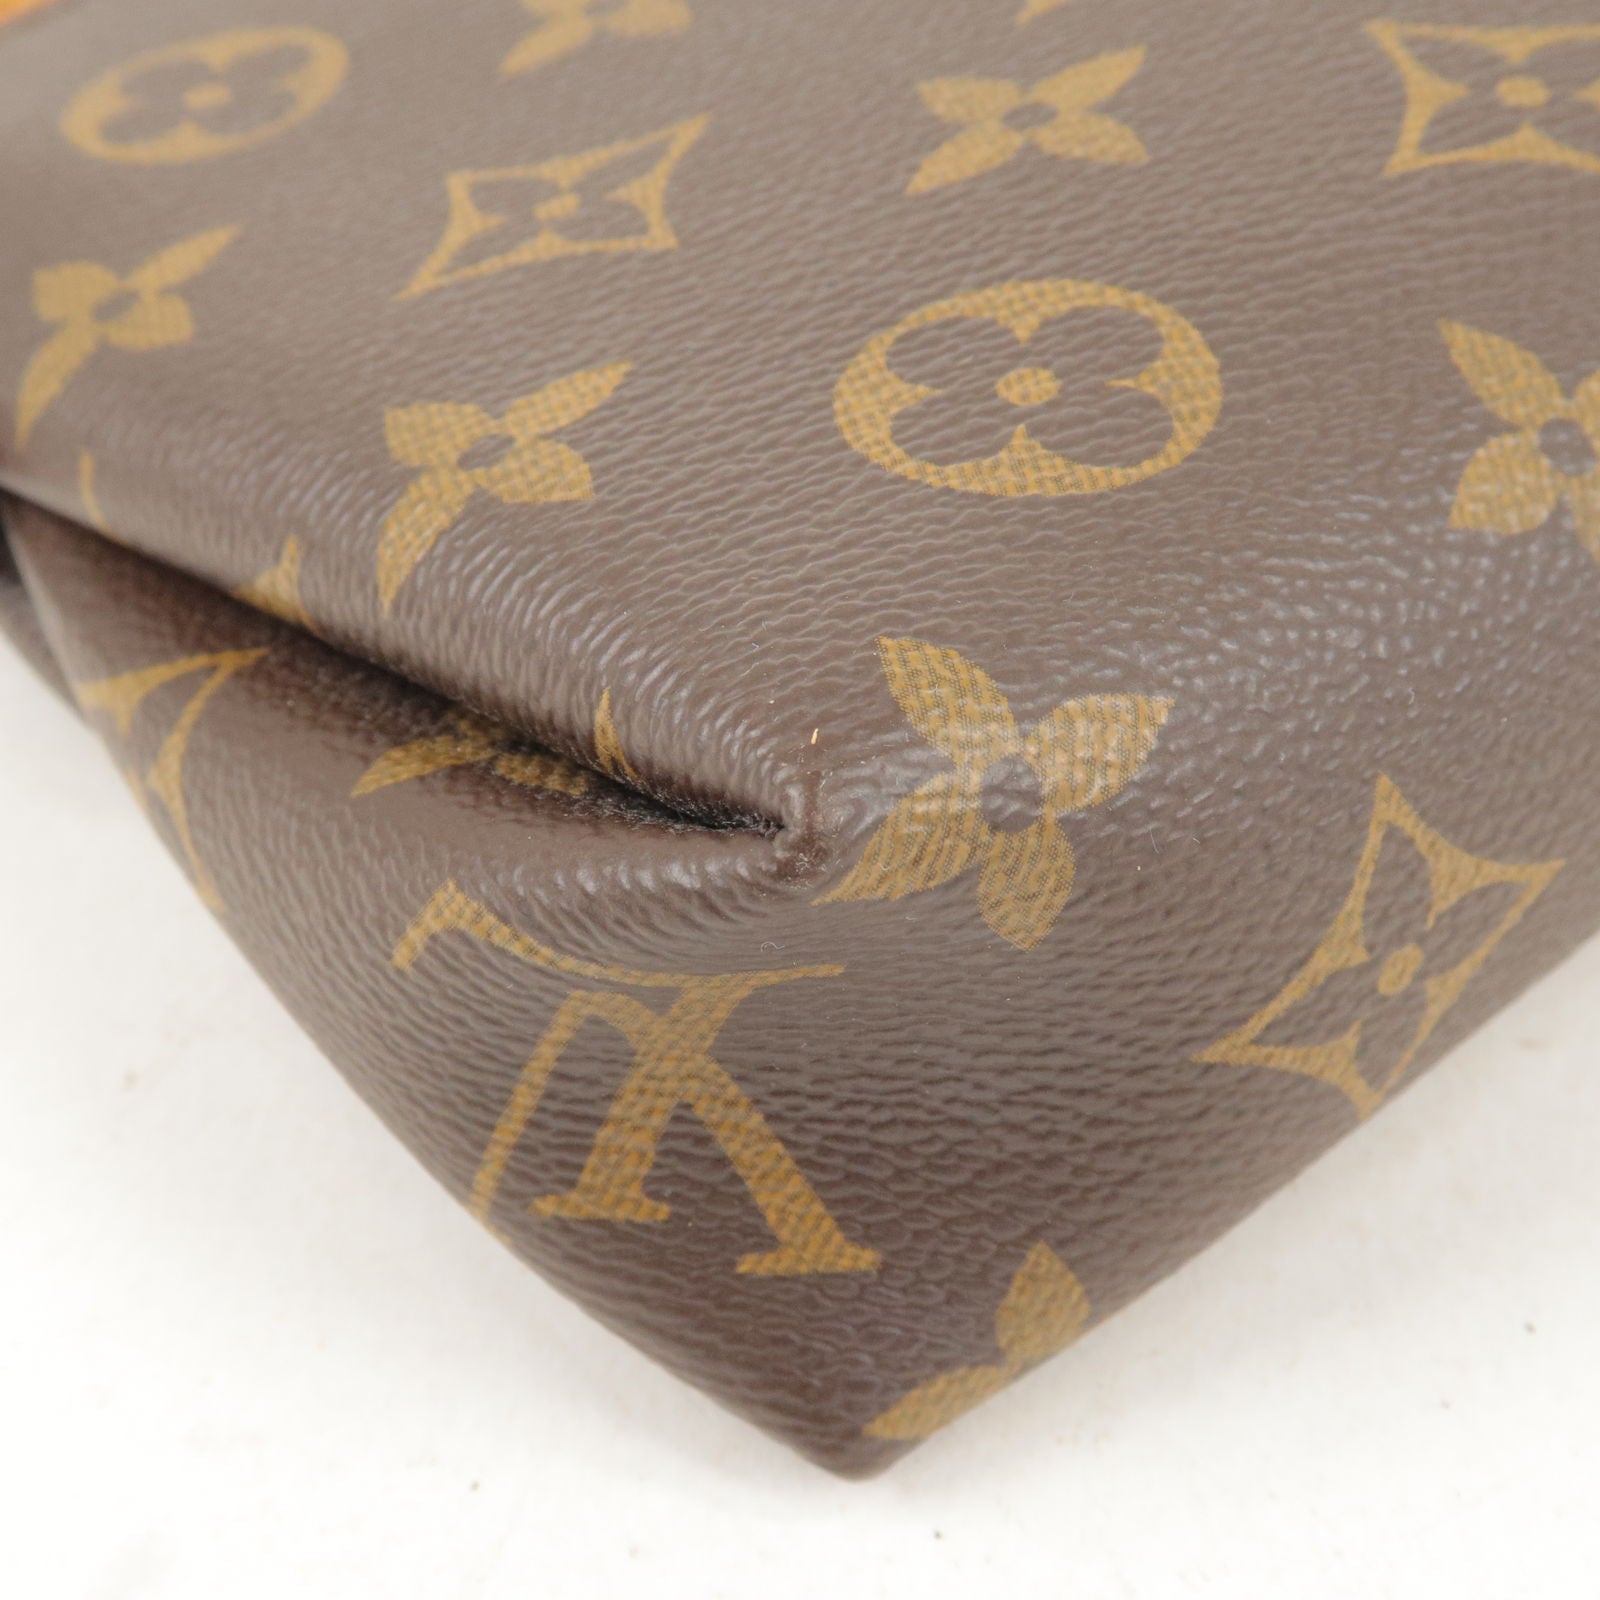 Louis-Vuitton-Monogram-Pallas-2Way-Hand-Bag-Aurore-M40906 – dct